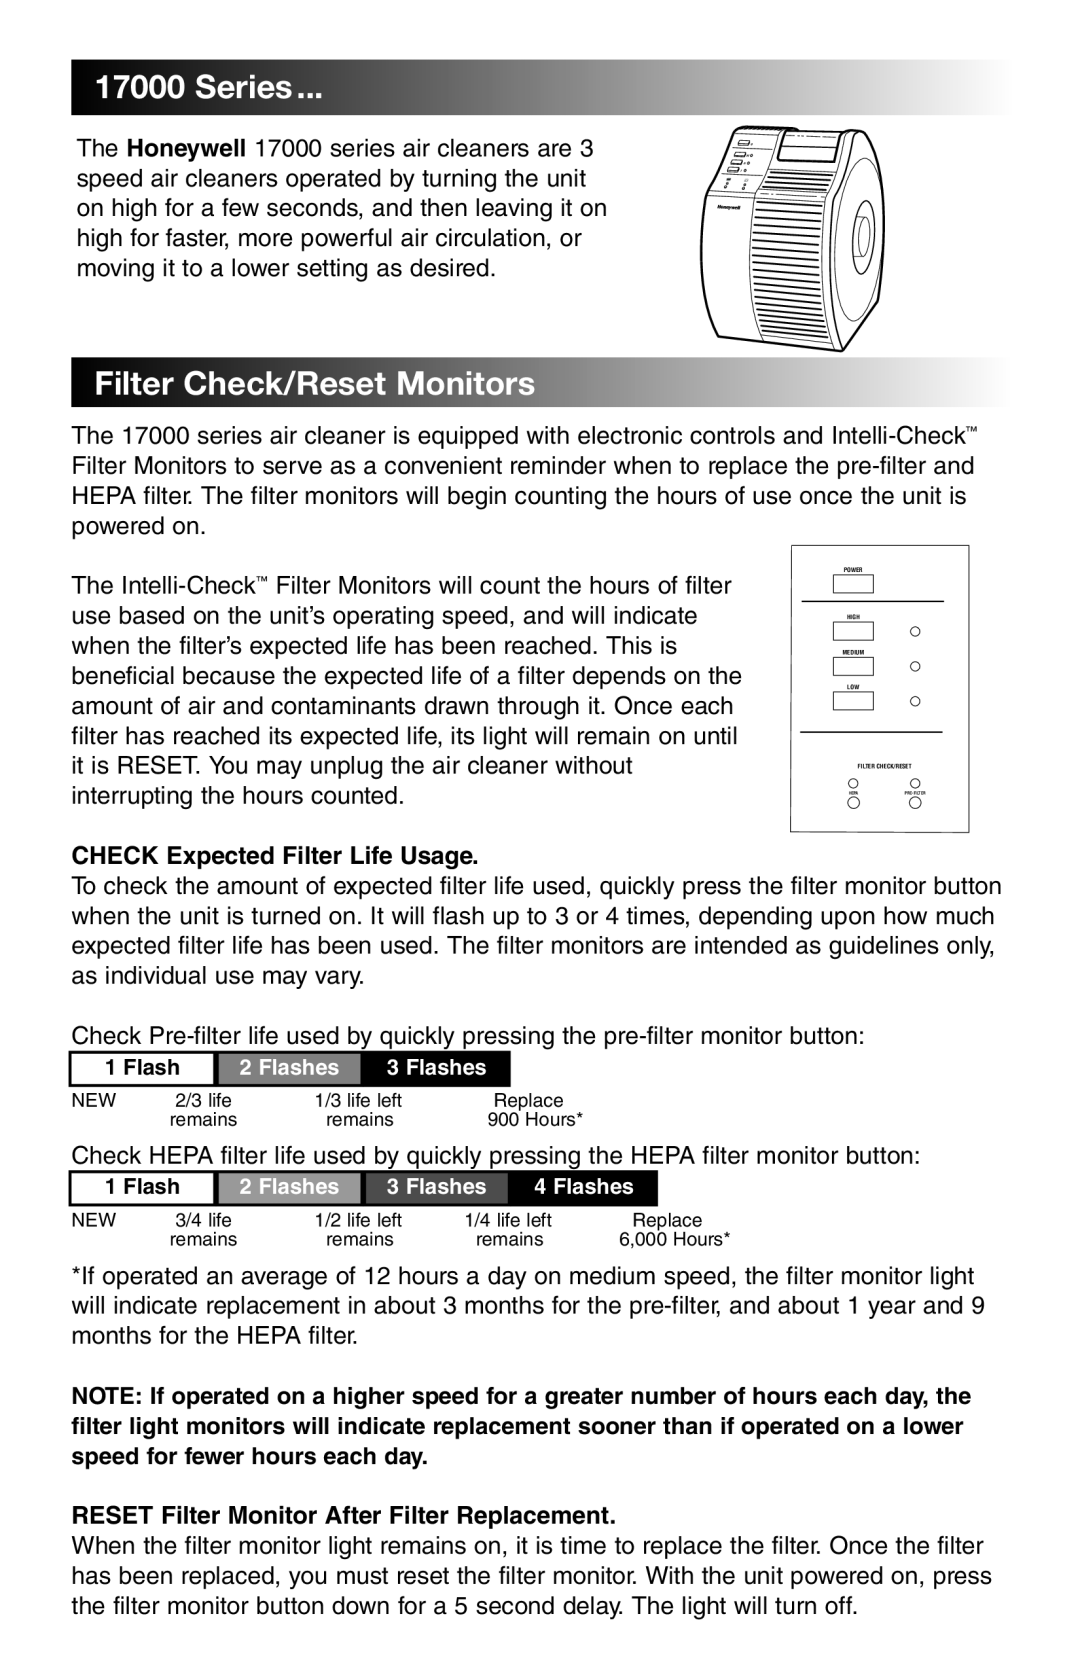 Honeywell manual 17000Series, FilterCheck/ResetMonitors, CHECK Expected Filter Life Usage 